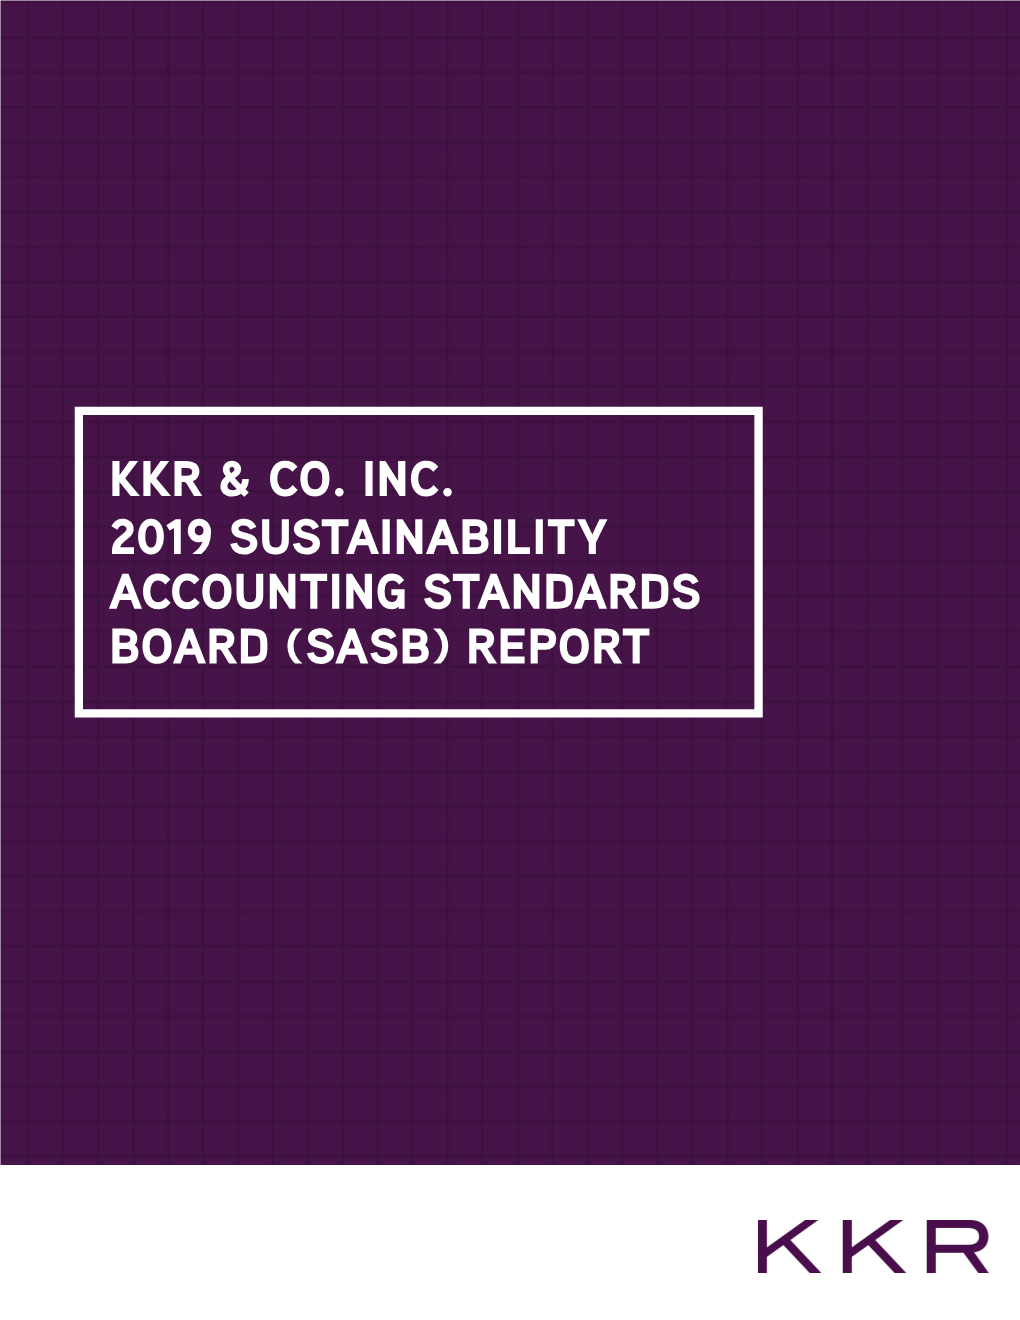 (SASB) REPORT KKR & Co